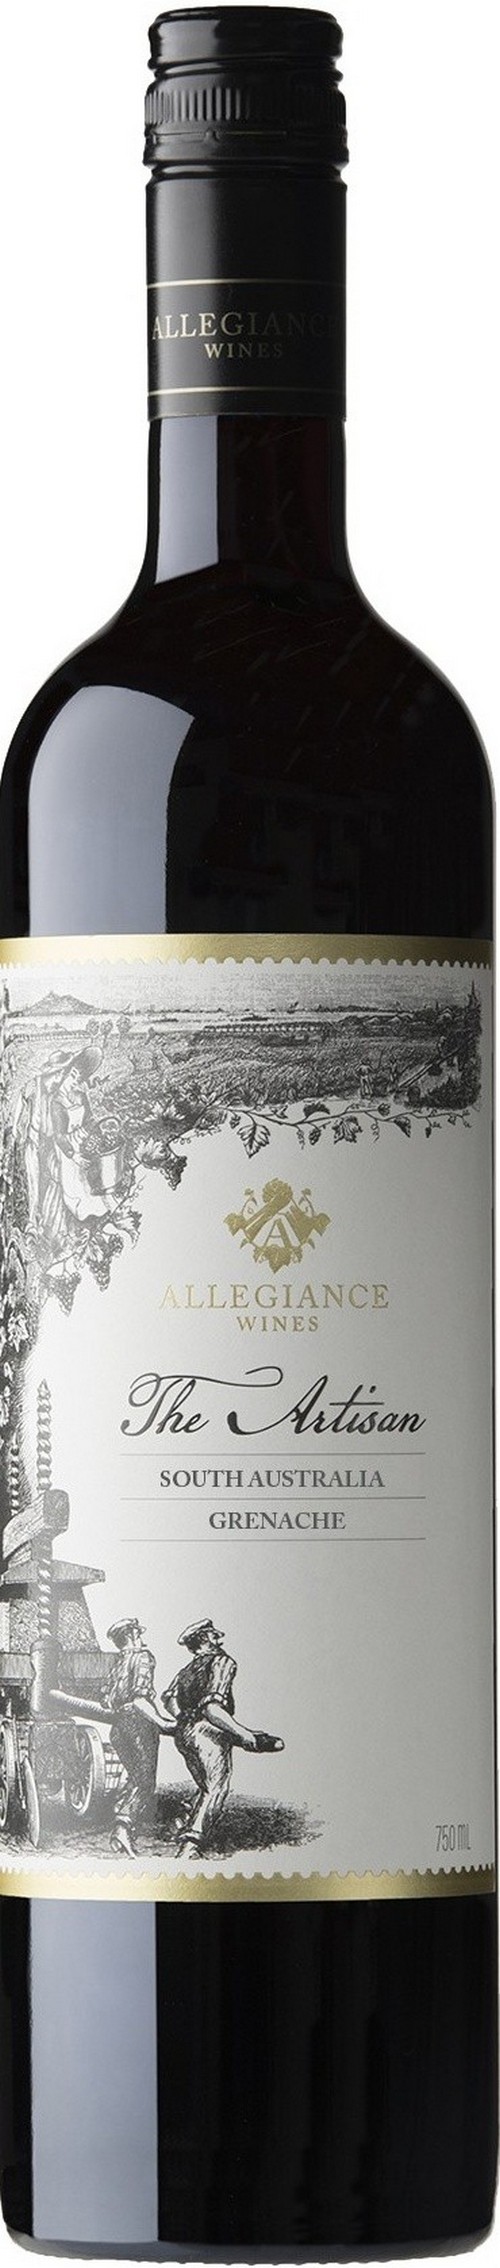 allegiance-wines-the-artisan-south-australia-grenache-2021